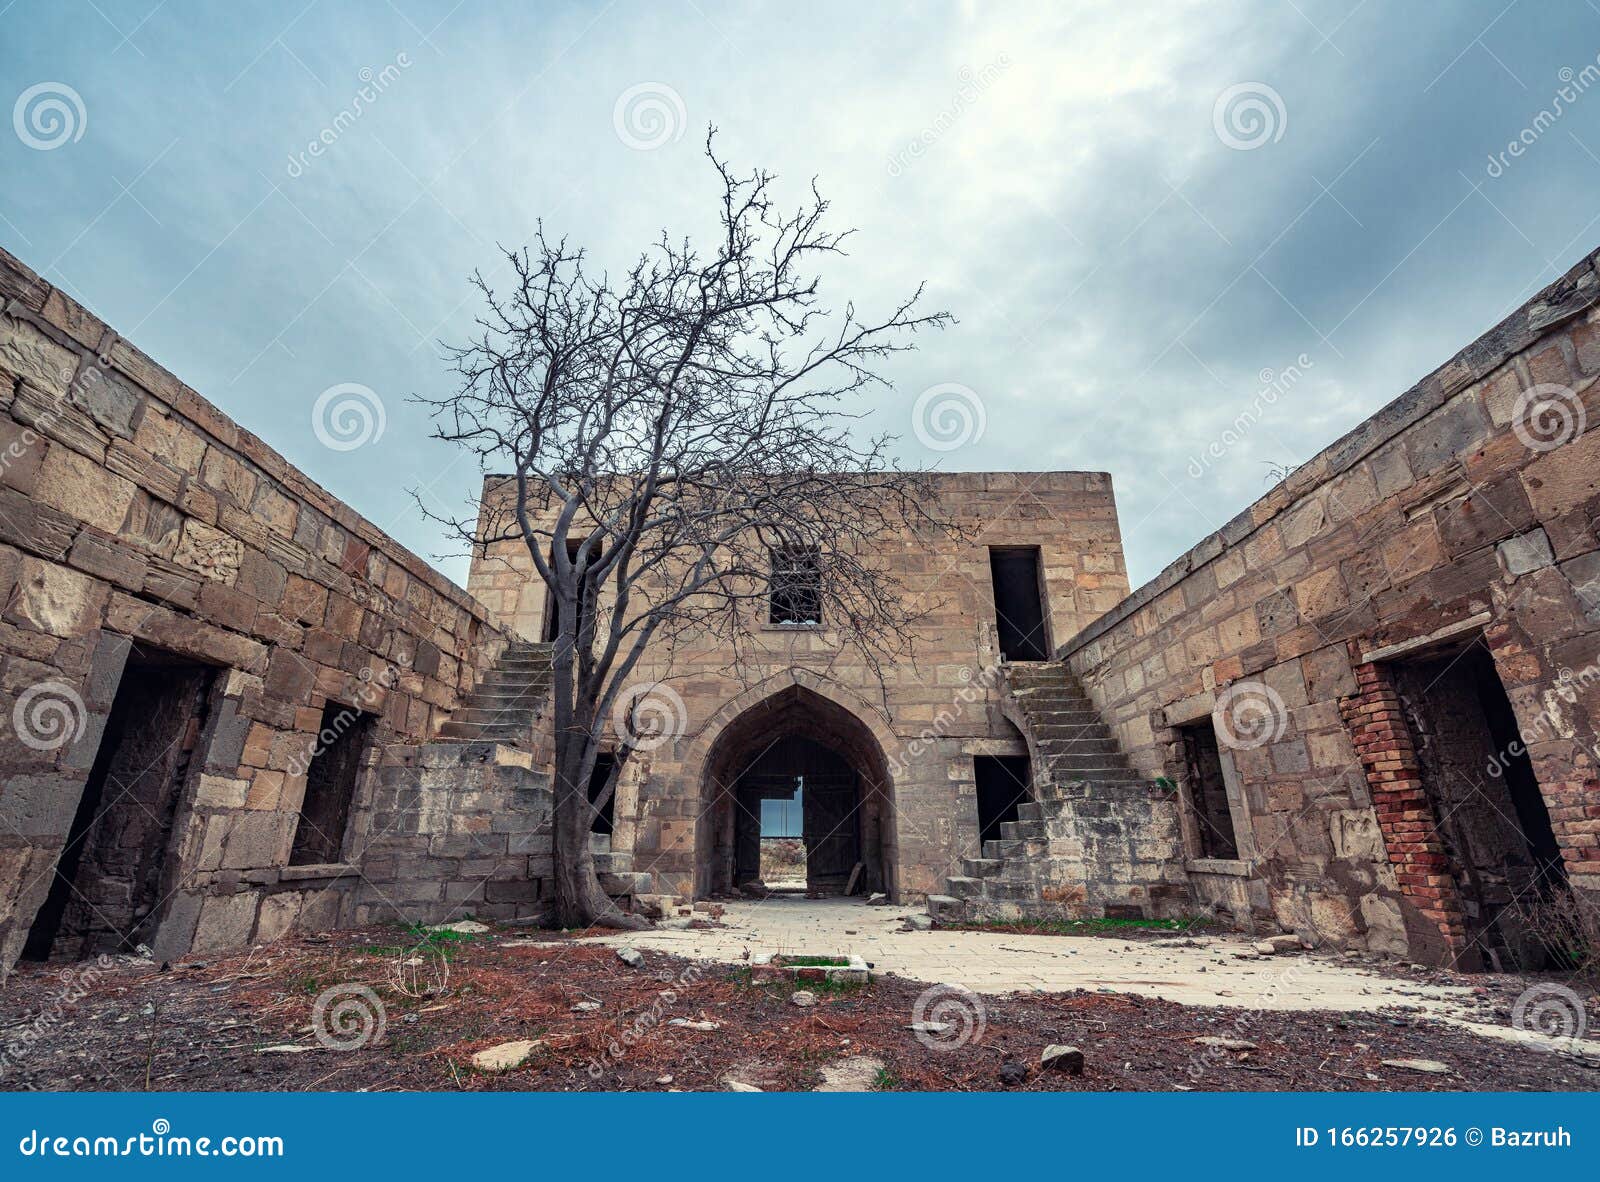 the ancient abandoned garachi caravanserai, refers to the xiv century, located in azerbaijan